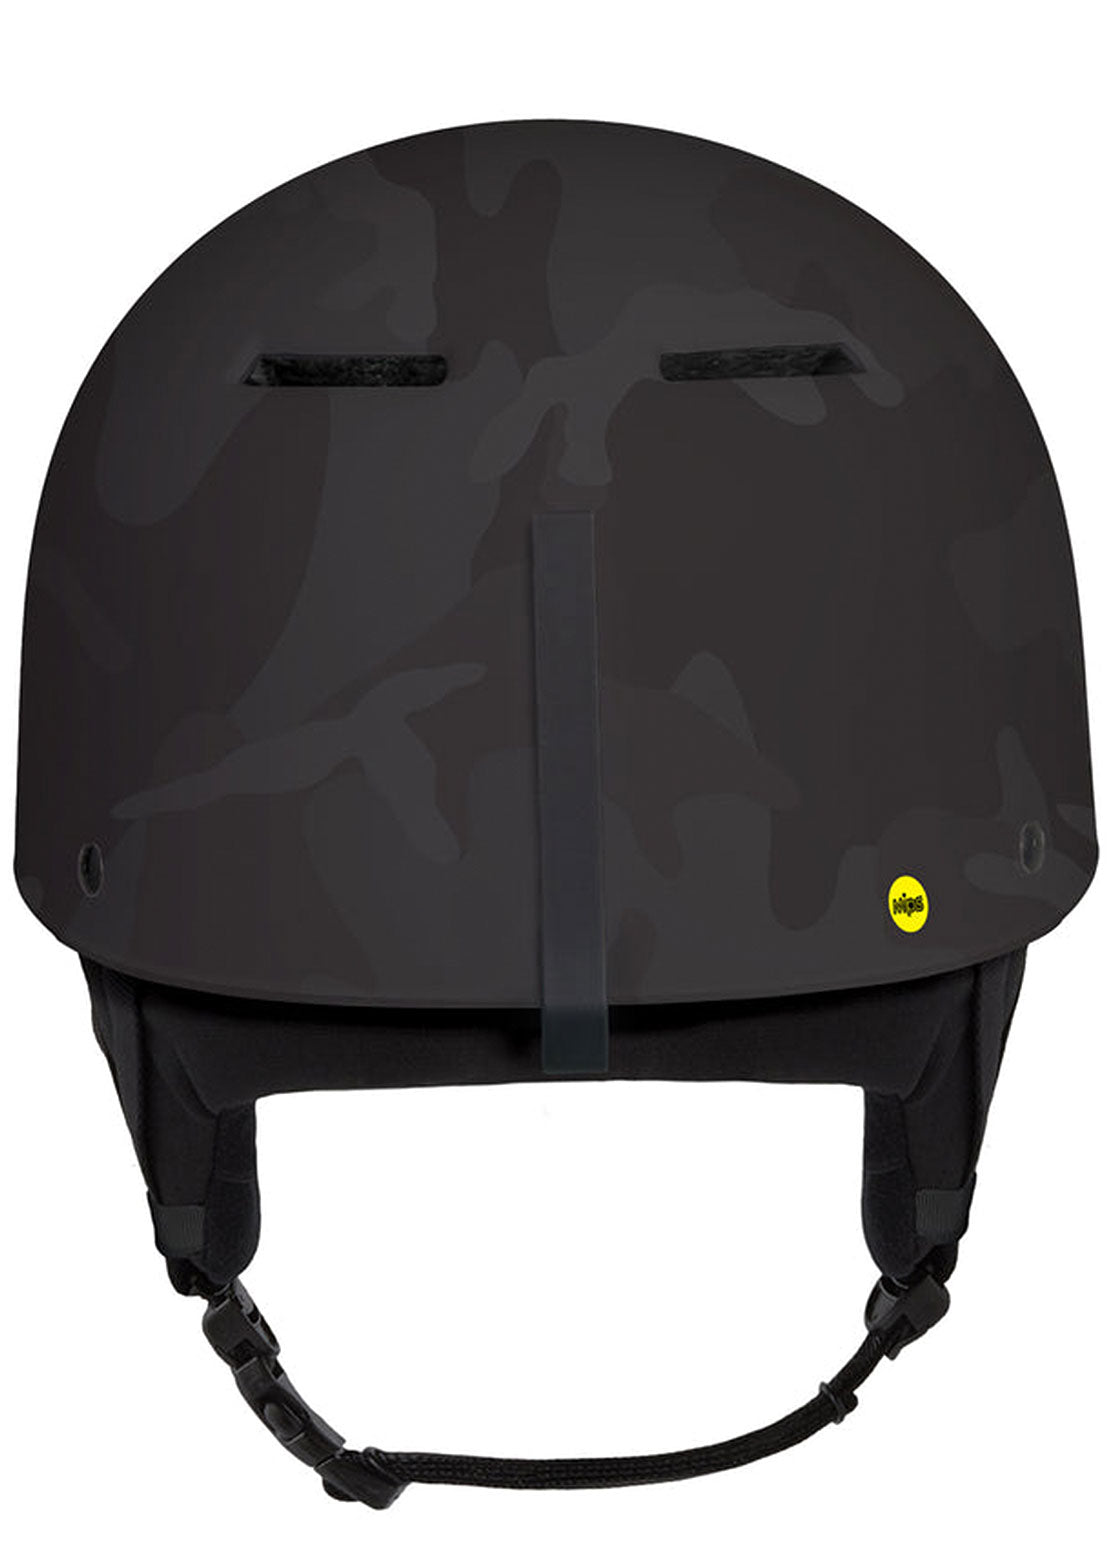 Sandbox Classic 2.0 Snow MIPS Winter Helmet Black Camo